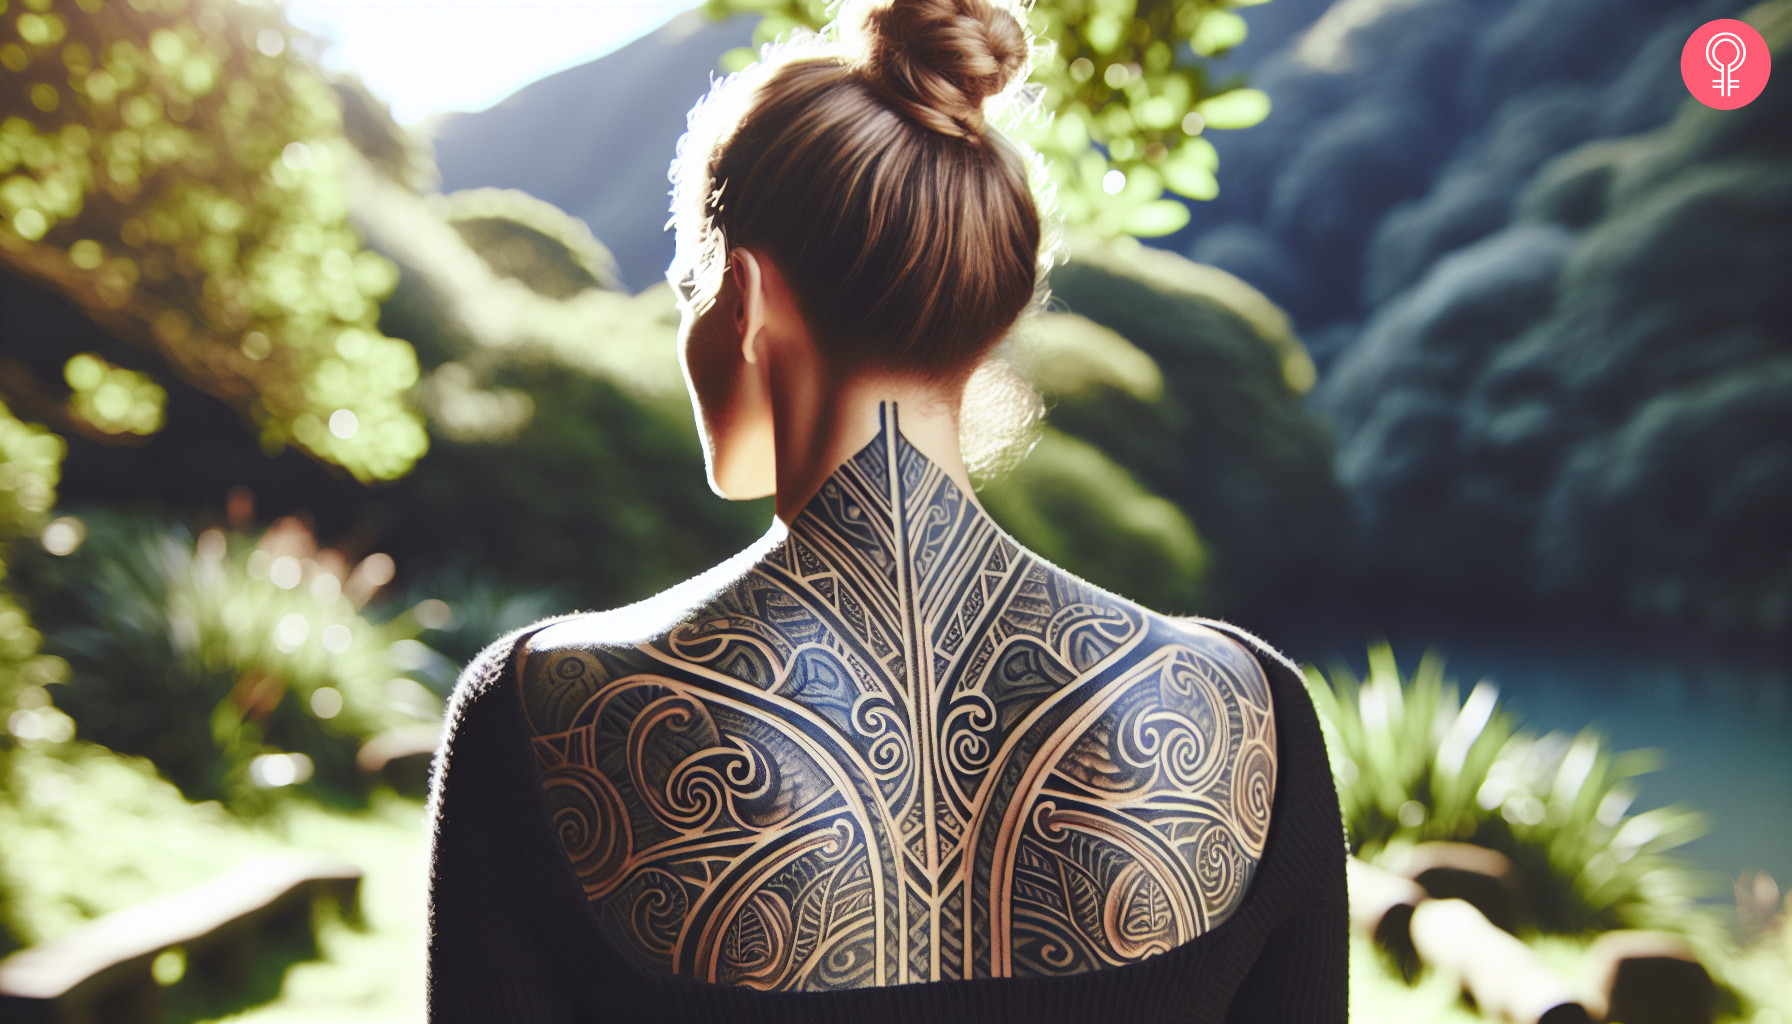 Warrior maori tattoo design on the upper back of a woman